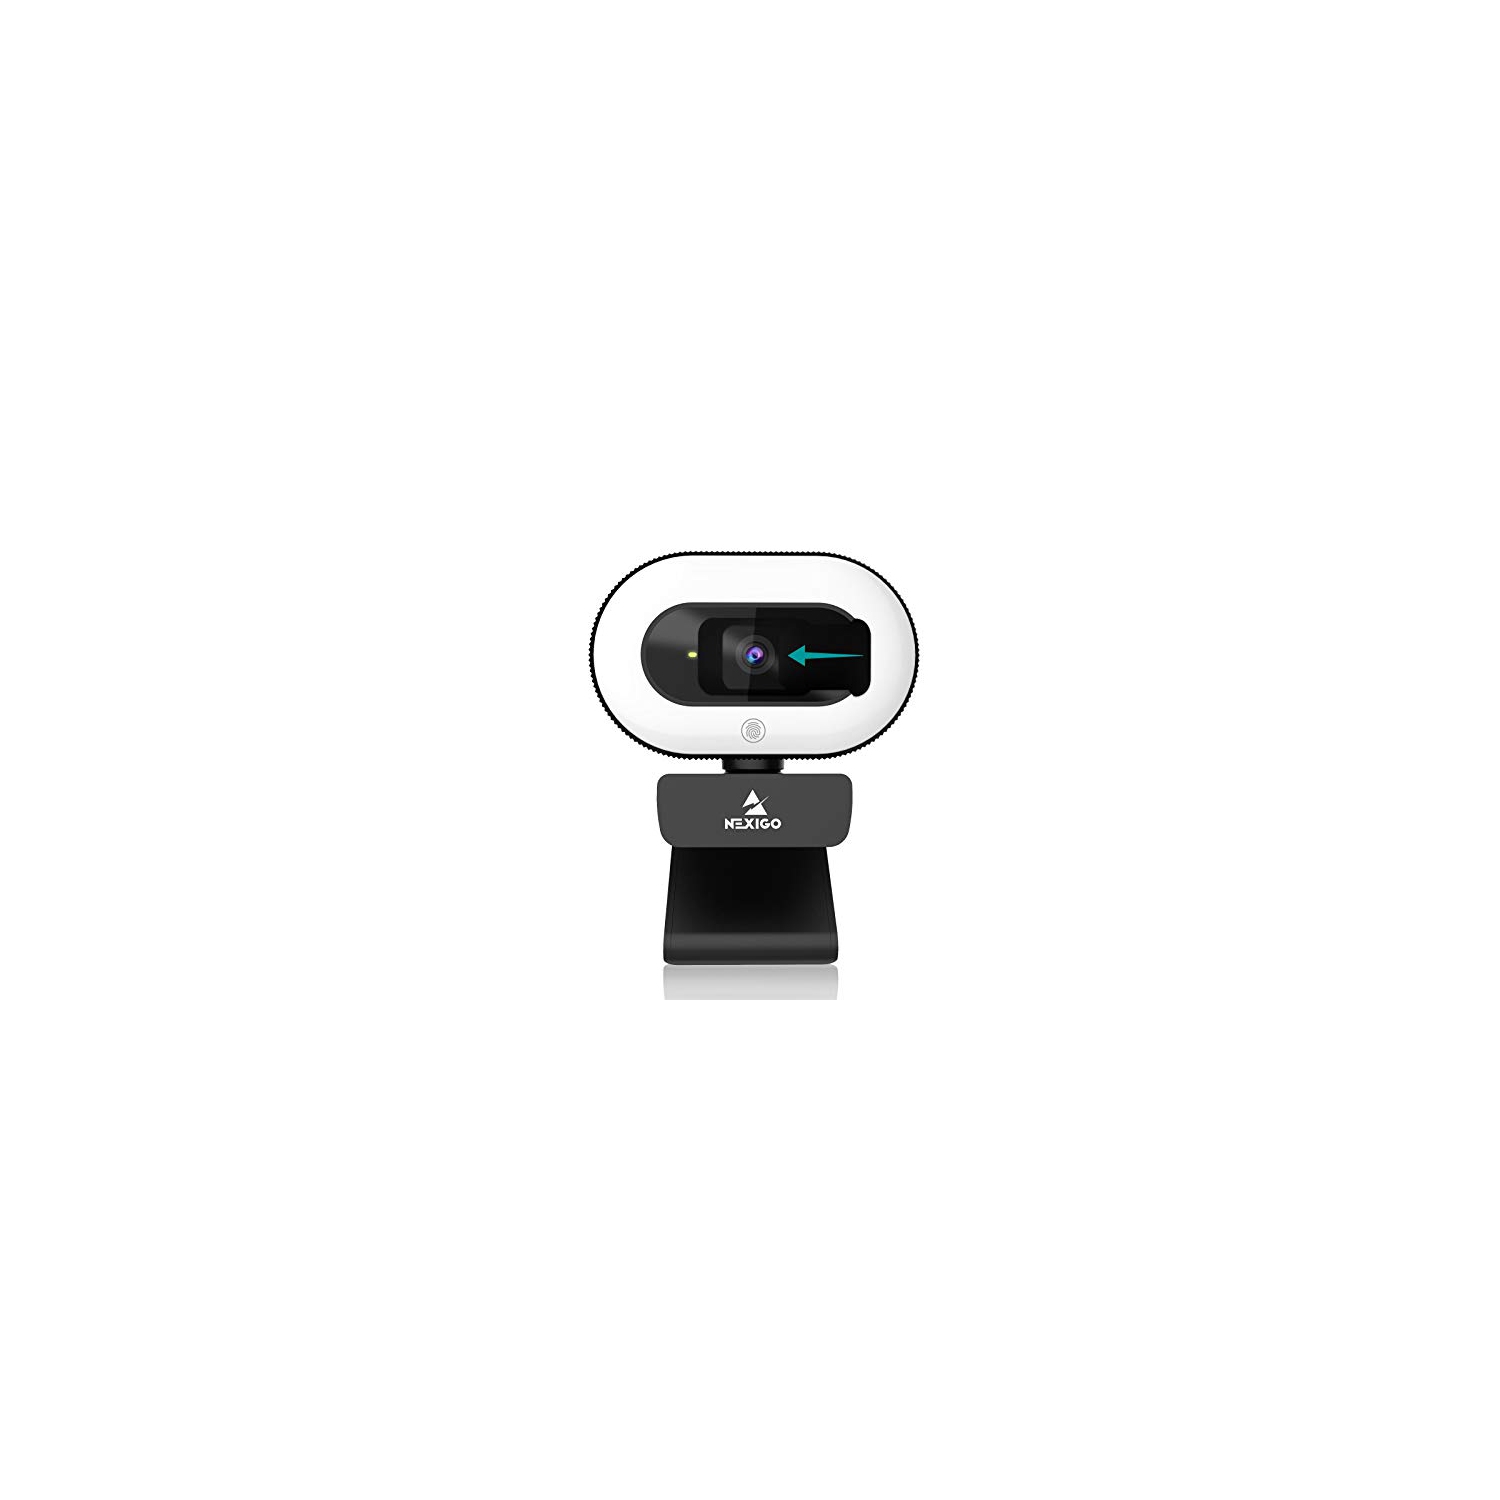  NexiGo 1080P Streaming Webcam with Speaker Kits, N930E